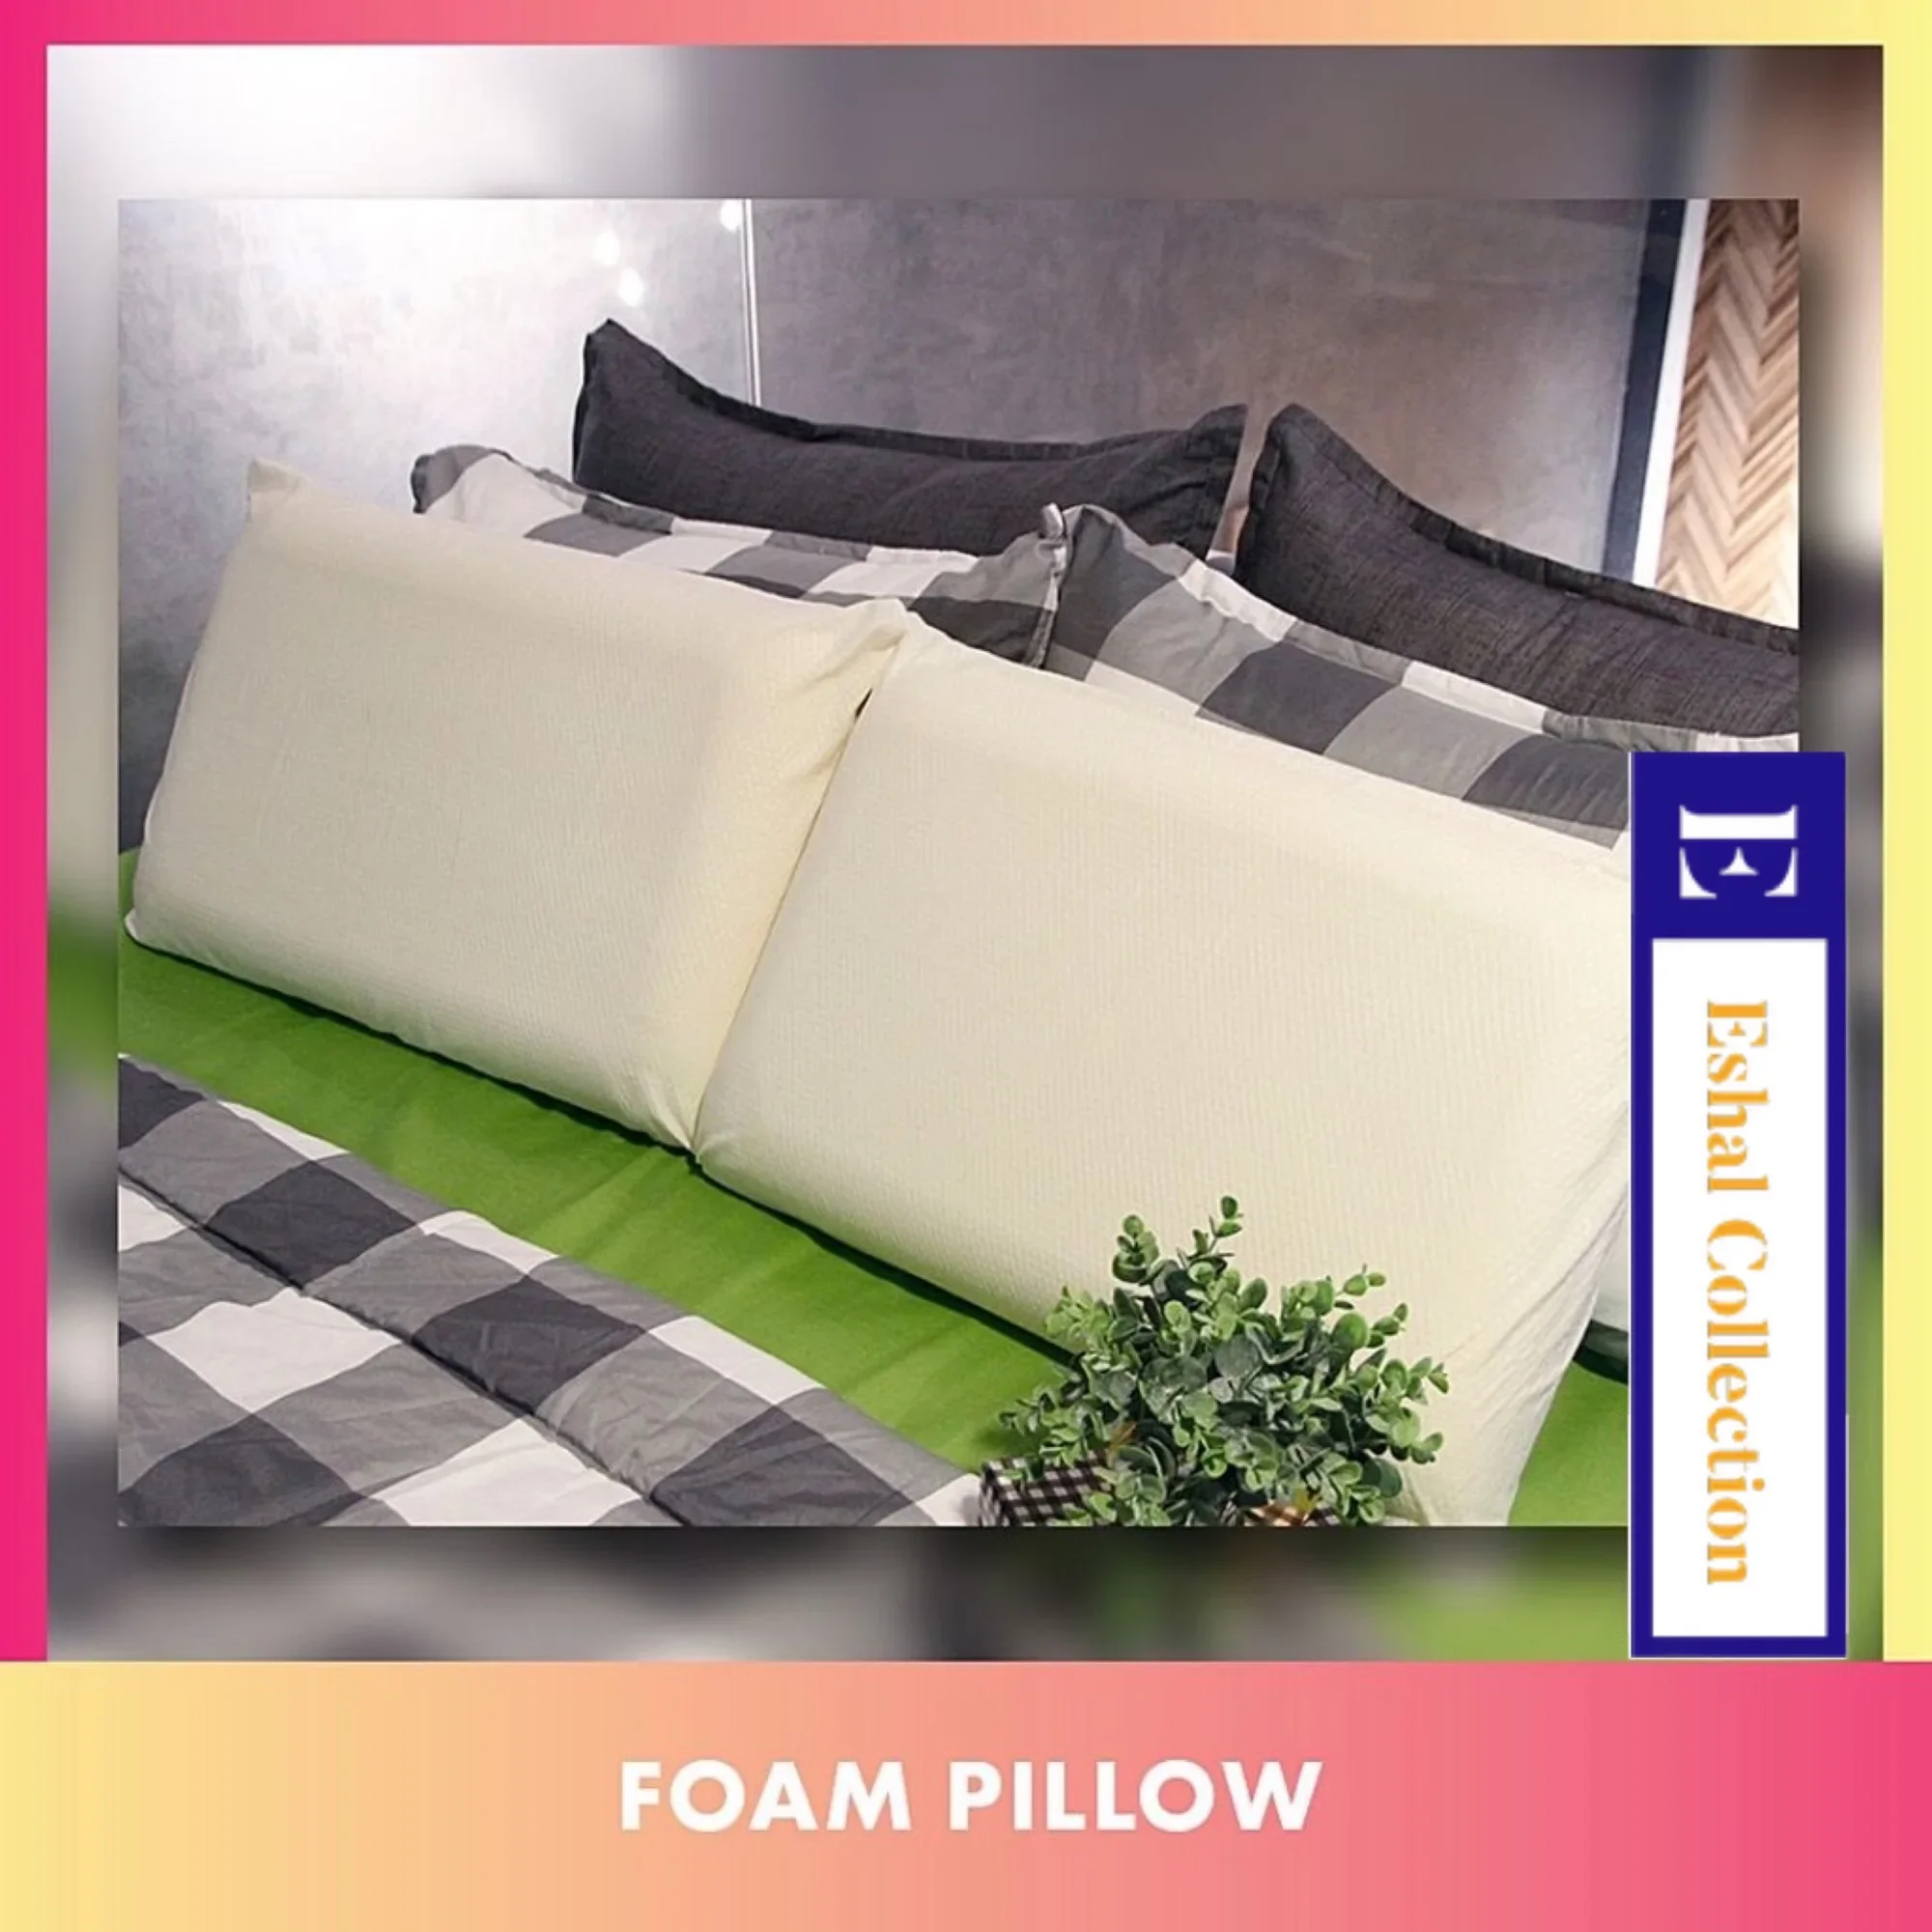 High Resilience Foam Pillow Standard Size (43cm x 69cm) / Bantal Foam yang Keras Price Like Free 🤭